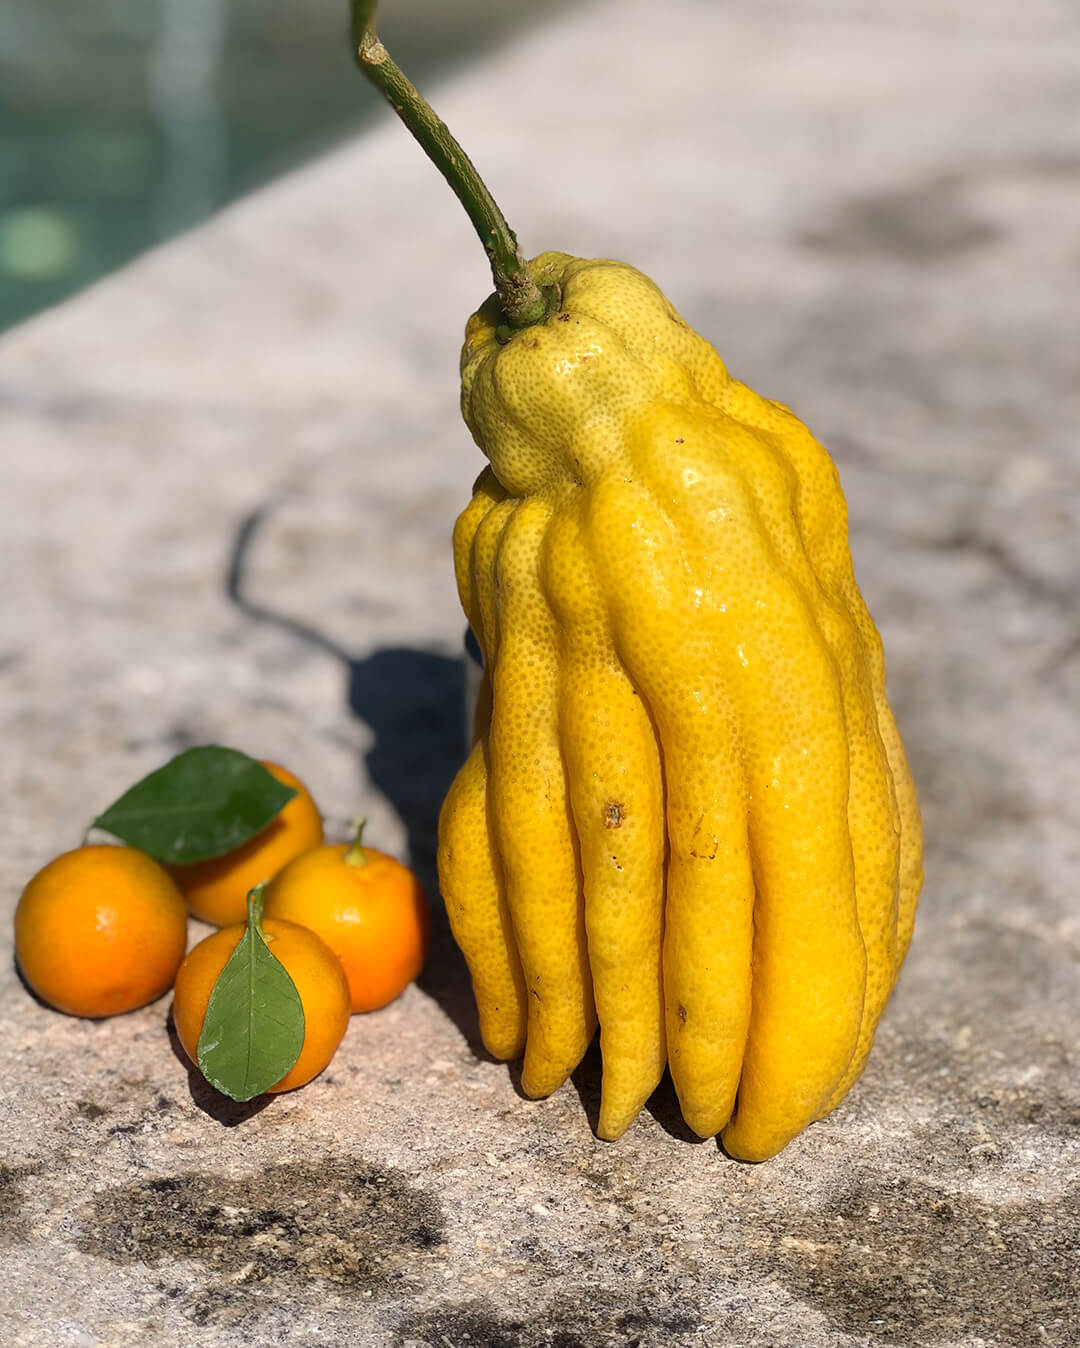 Main de Bouddha - Plantation d'agrumes rares Lemon Story - La Crau France